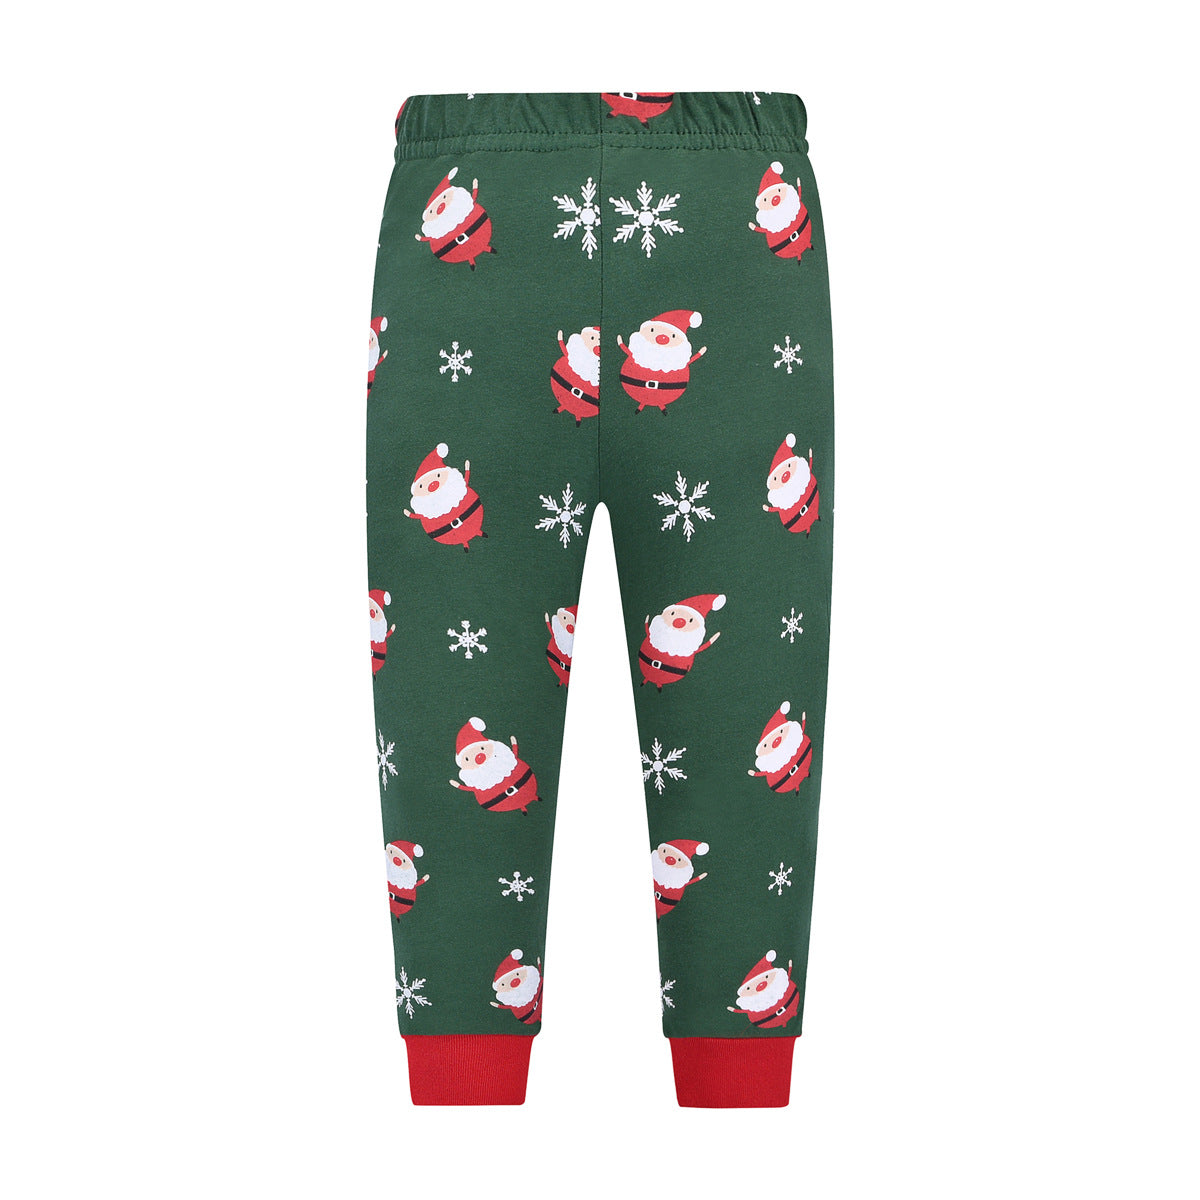 Cute Santa Claus and Reindeer Print Christmas Family Pajamas Set